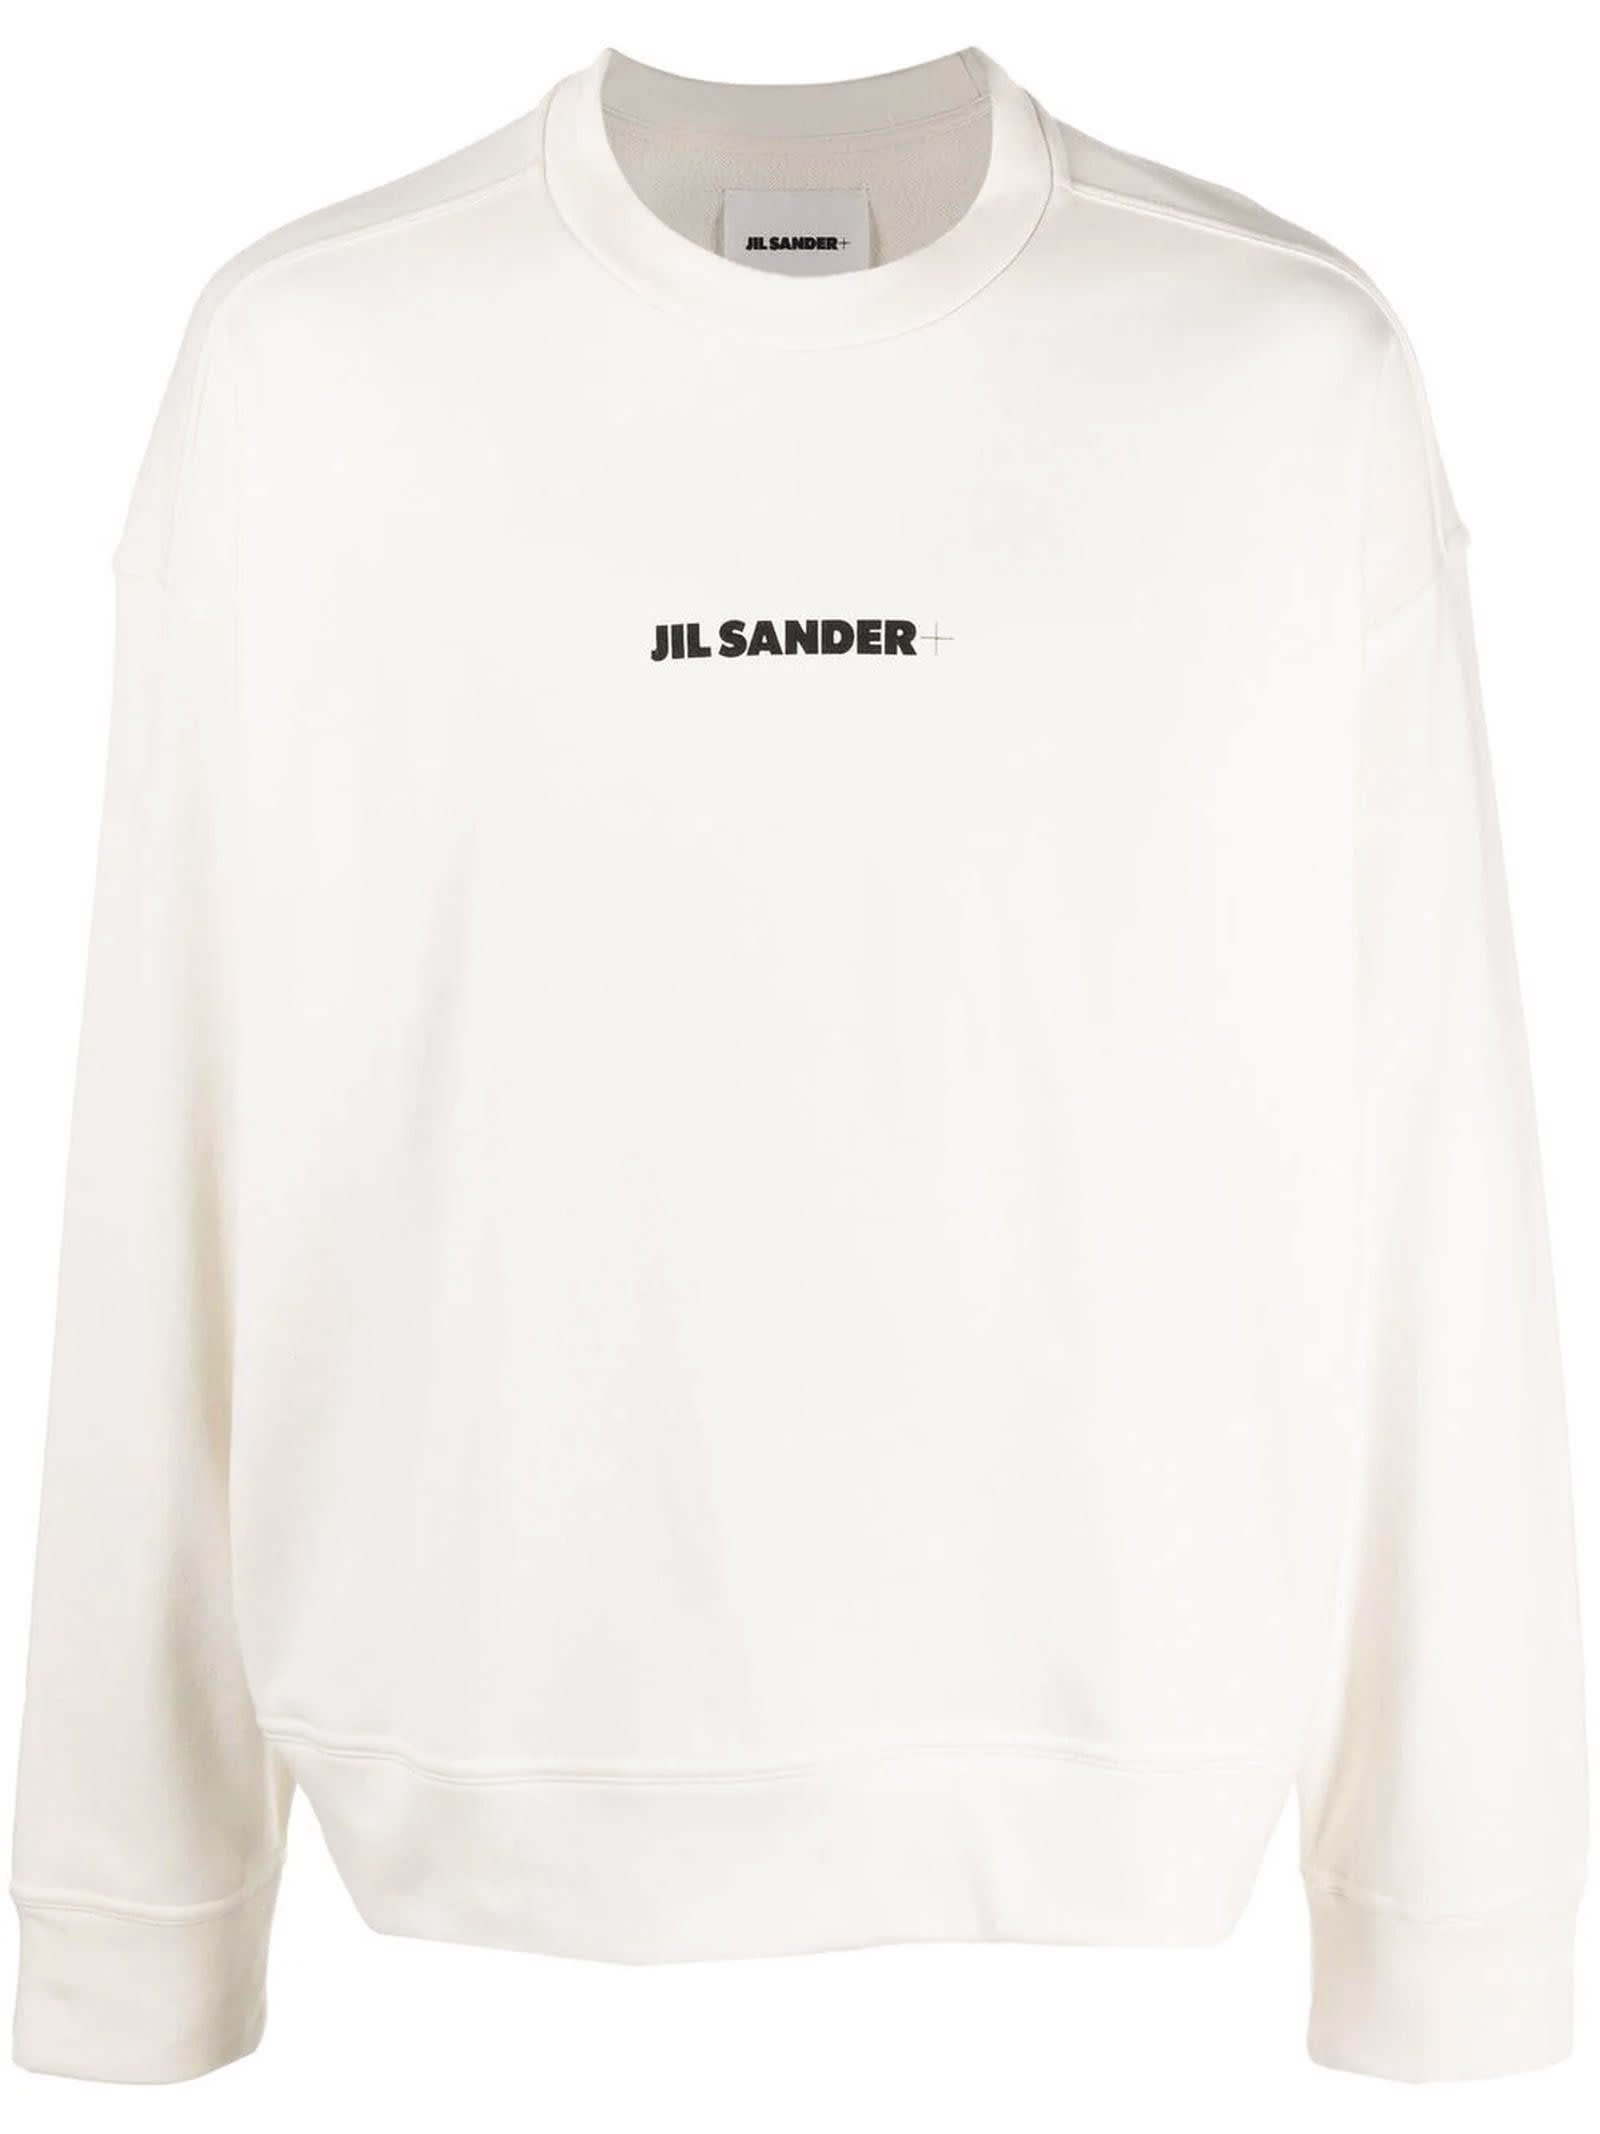 Jil Sander Cream Cotton Sweatshirt